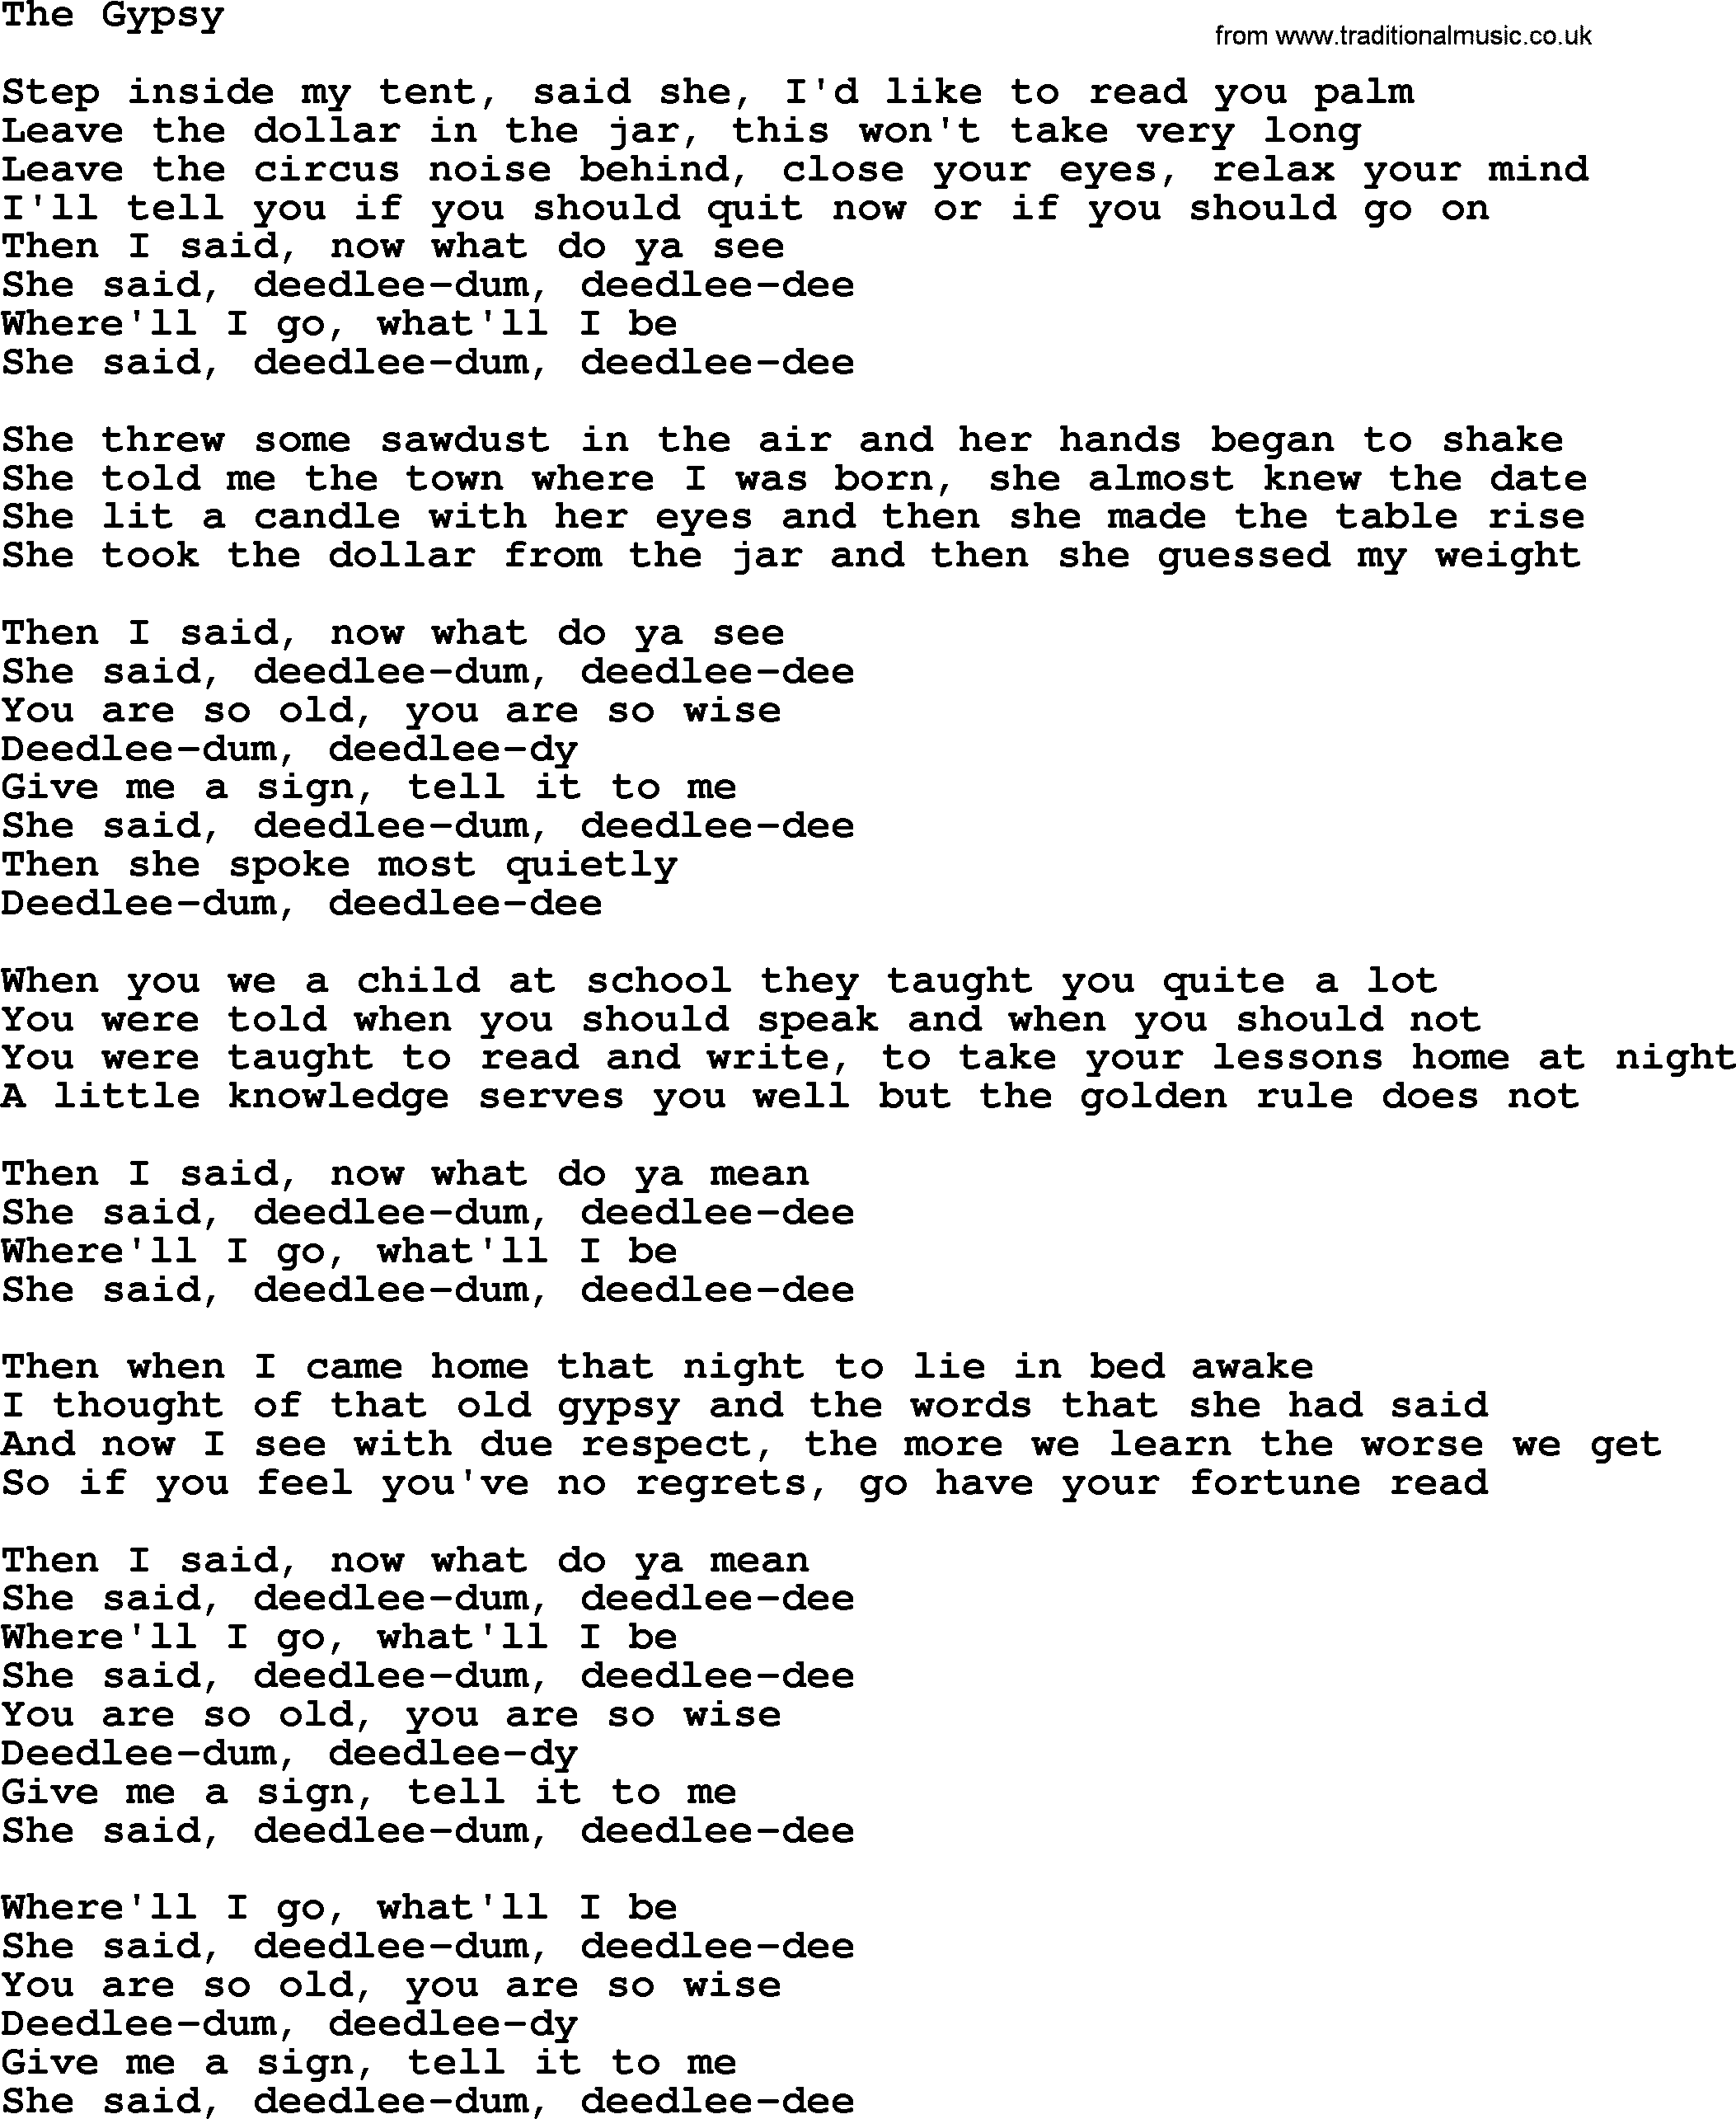 Gordon Lightfoot song The Gypsy, lyrics